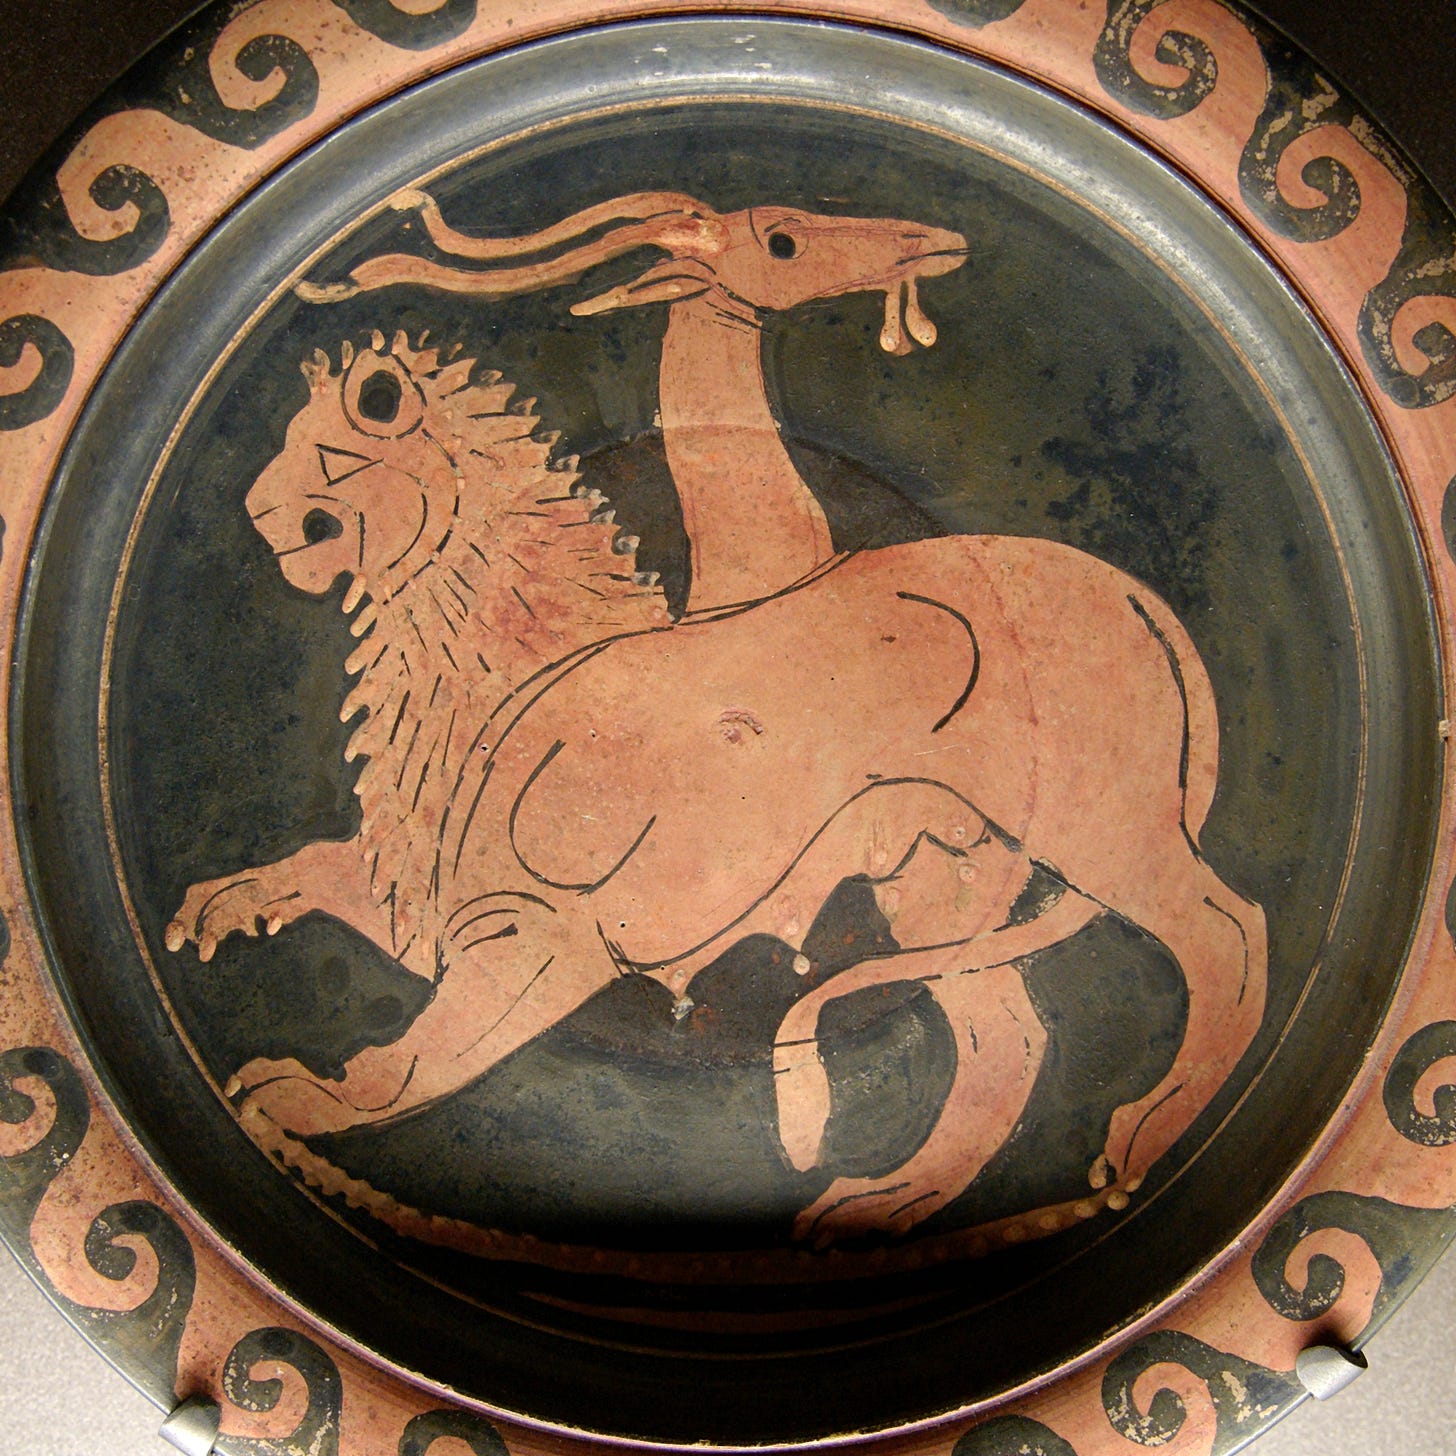 Chimera (mythology) - Wikipedia